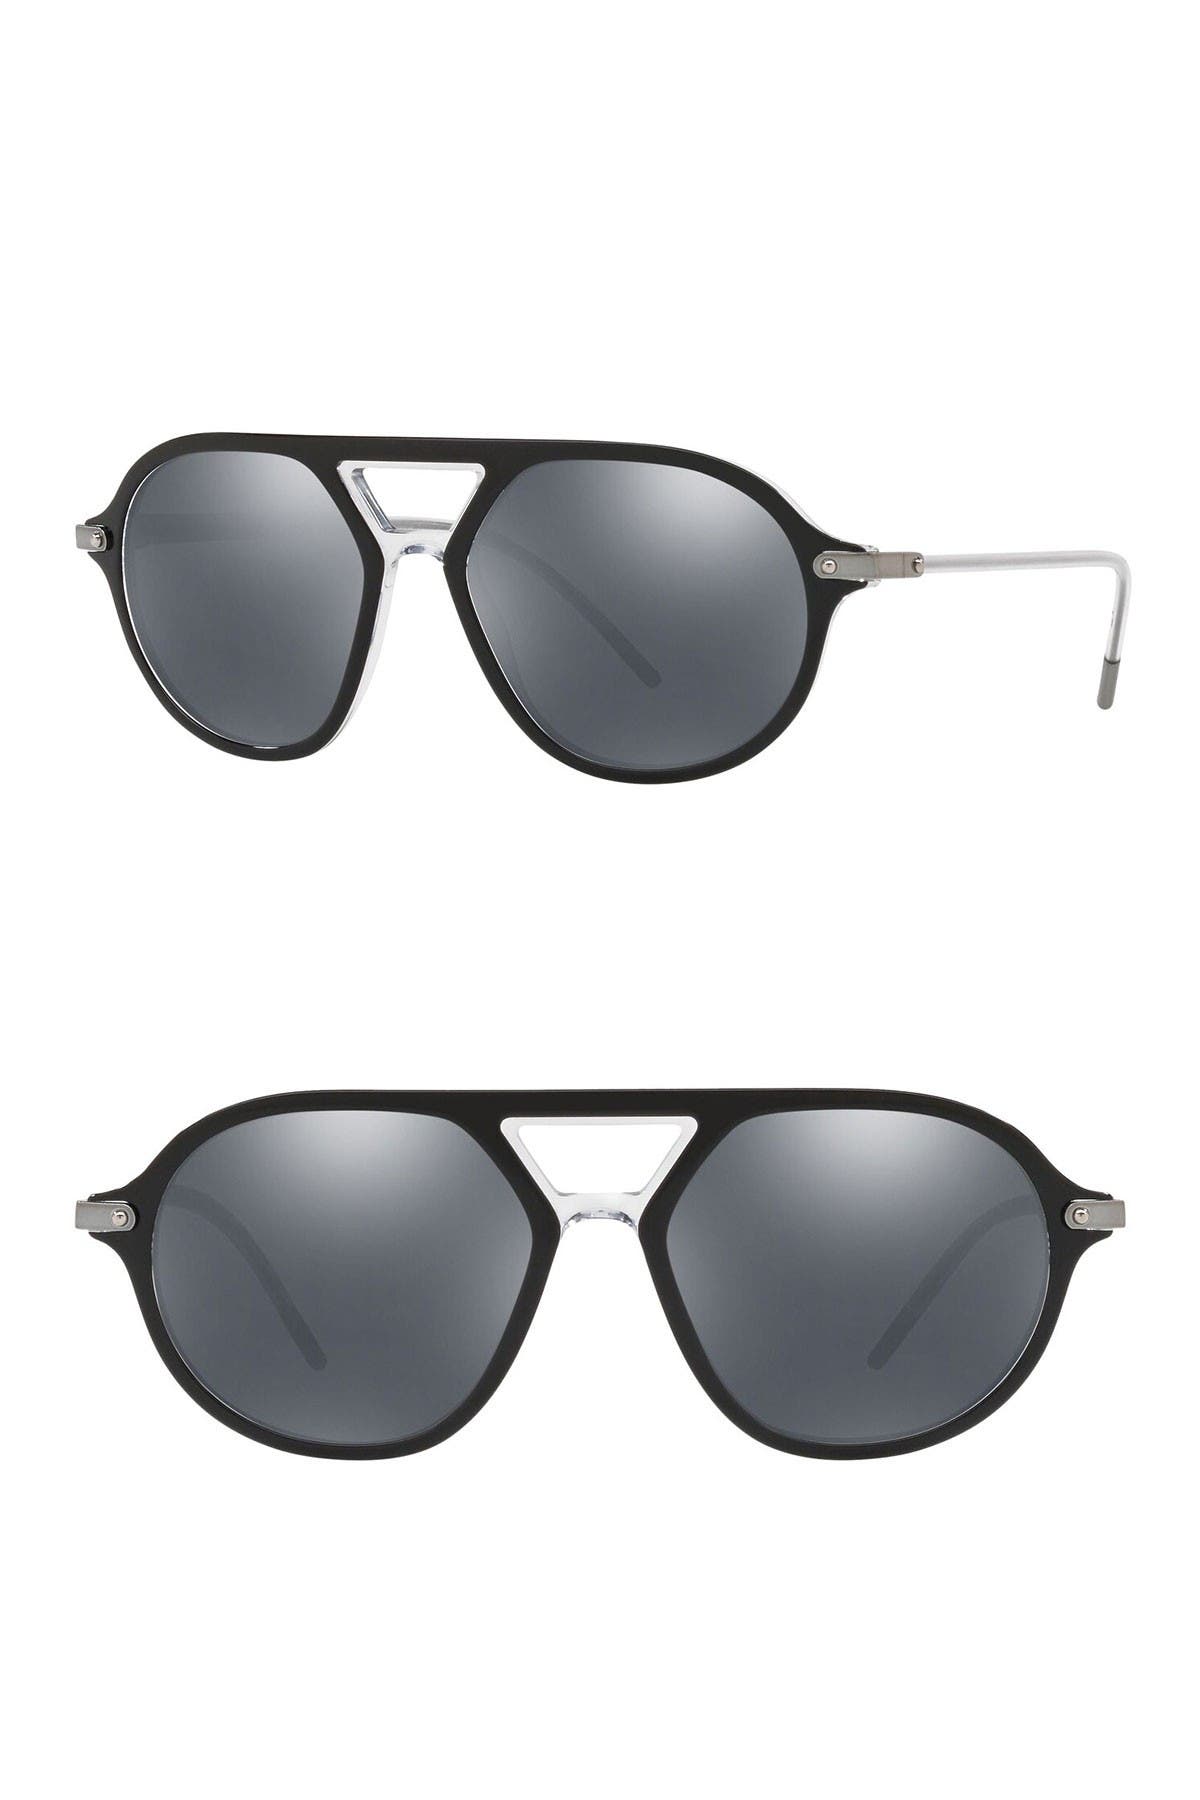 Dolce \u0026 Gabbana | 54mm Pilot Sunglasses 